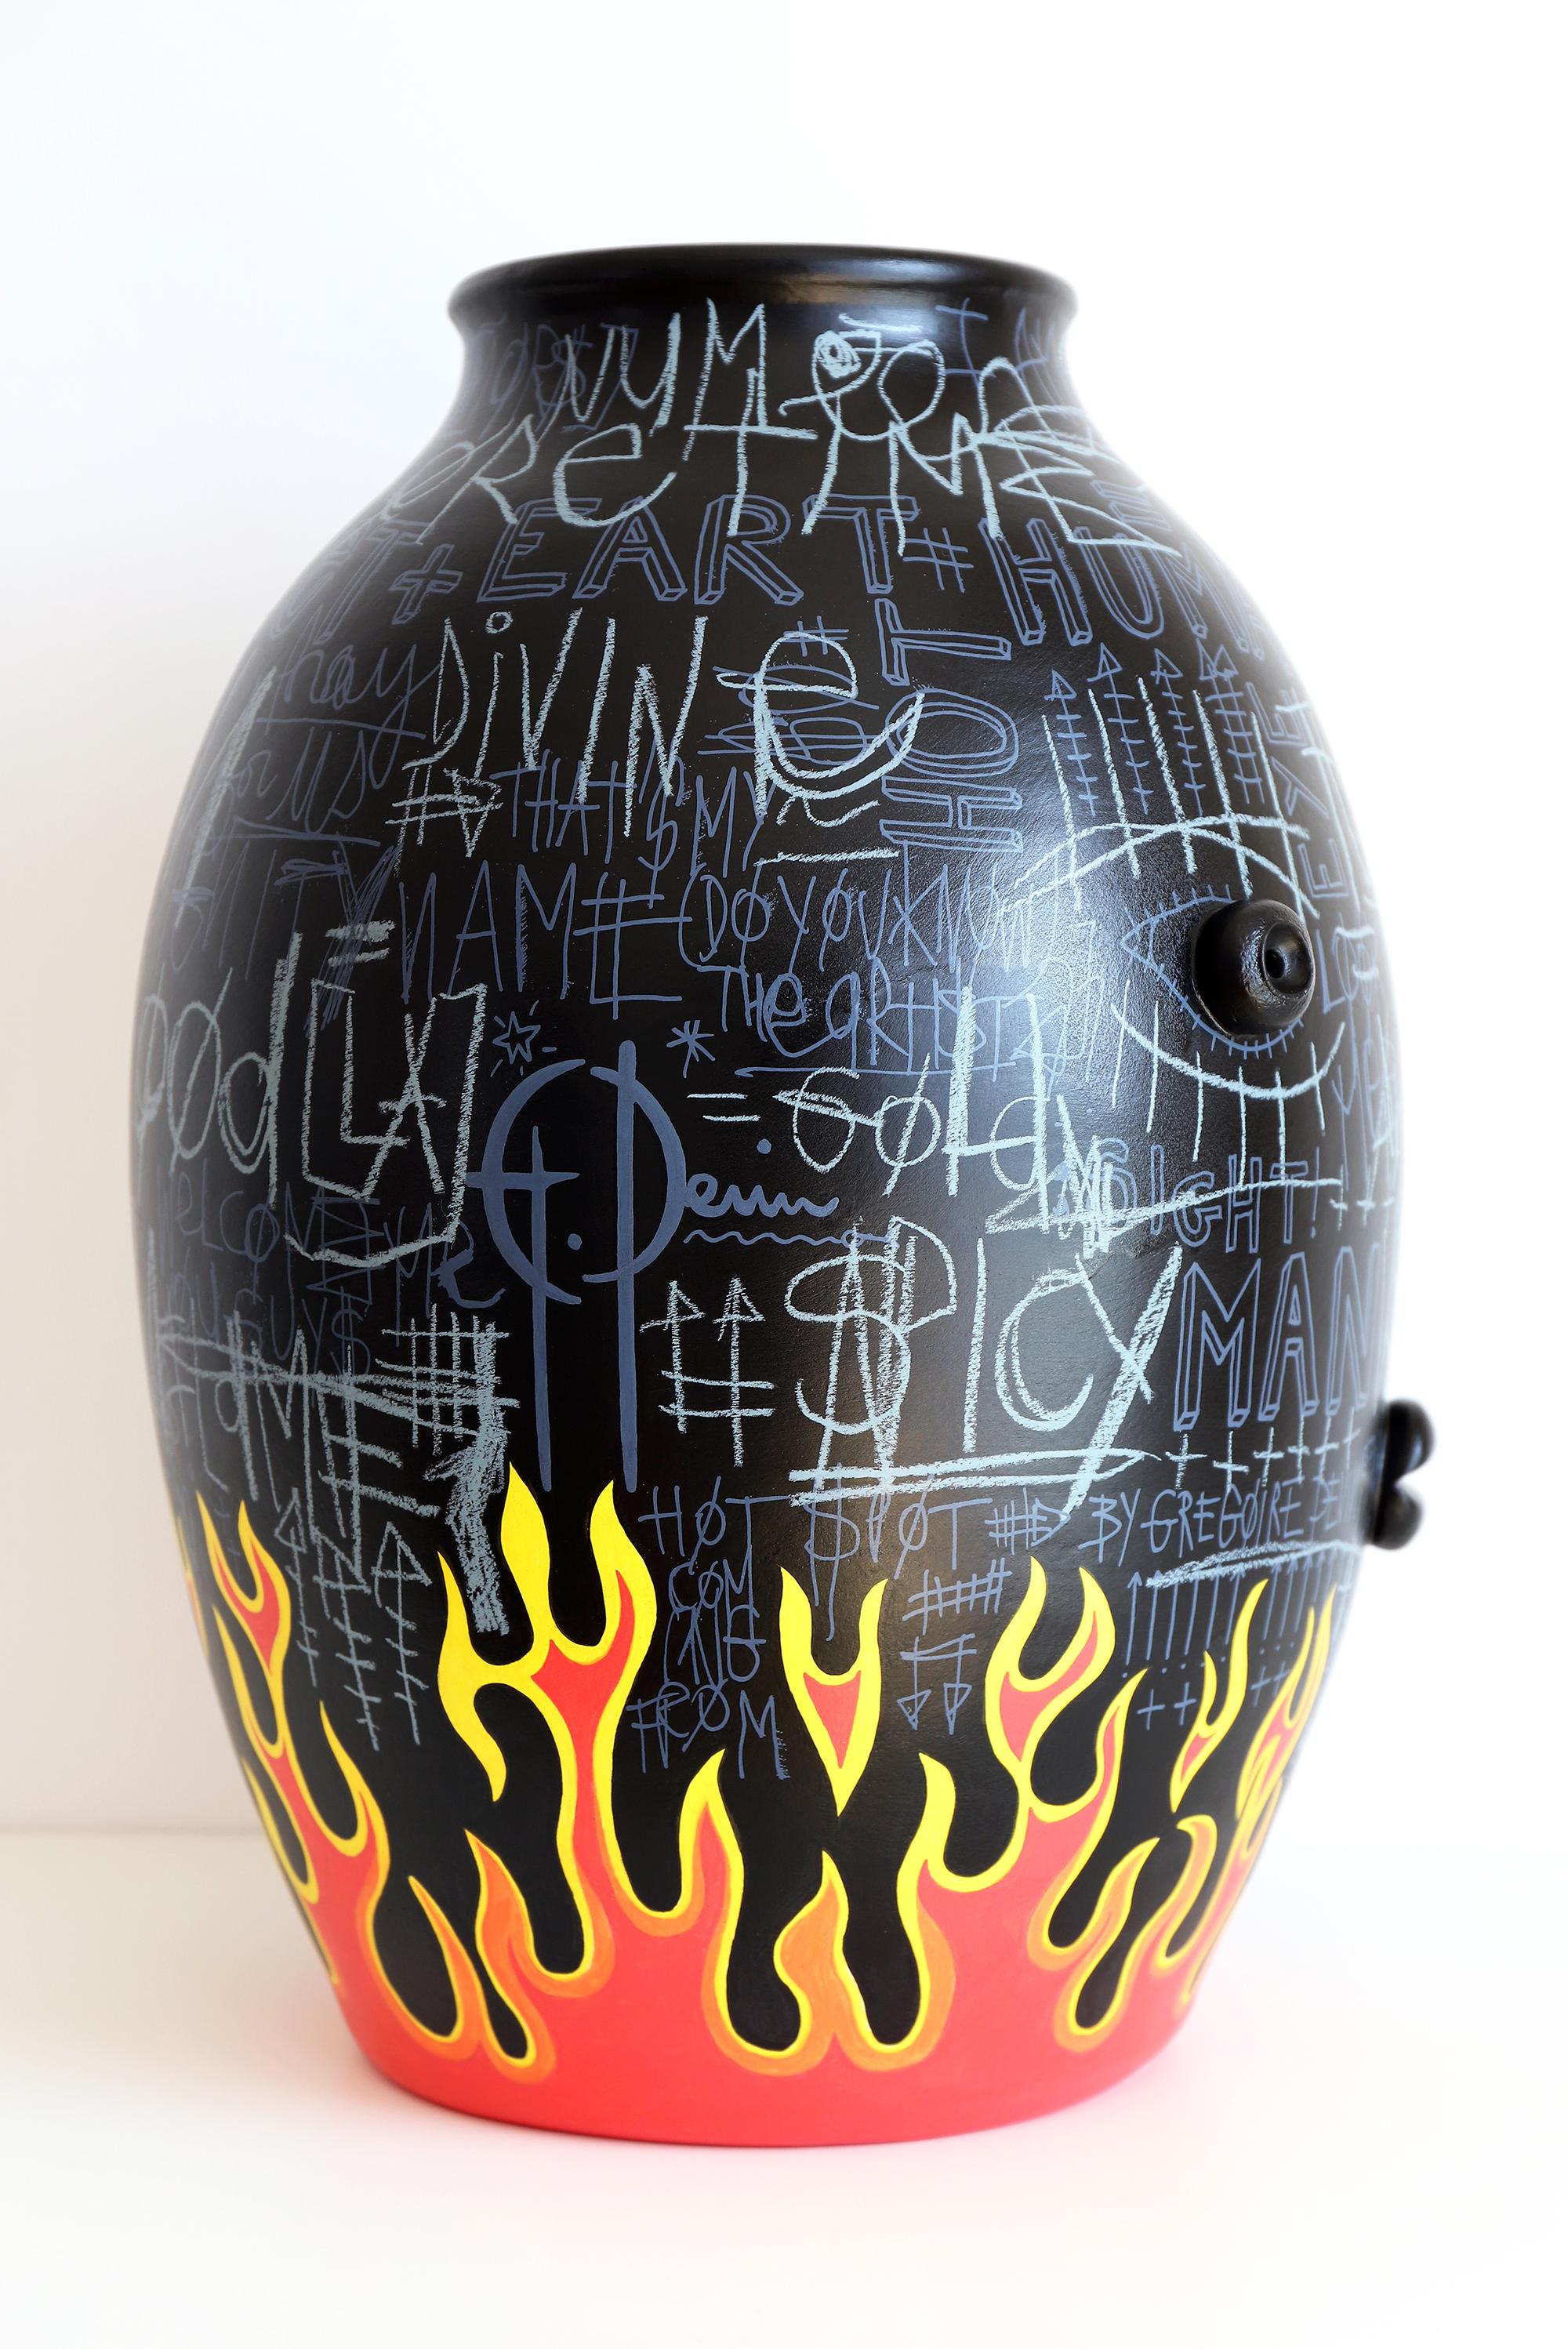 Burn Hollywood Burn - Sculpture by Grégoire Devin